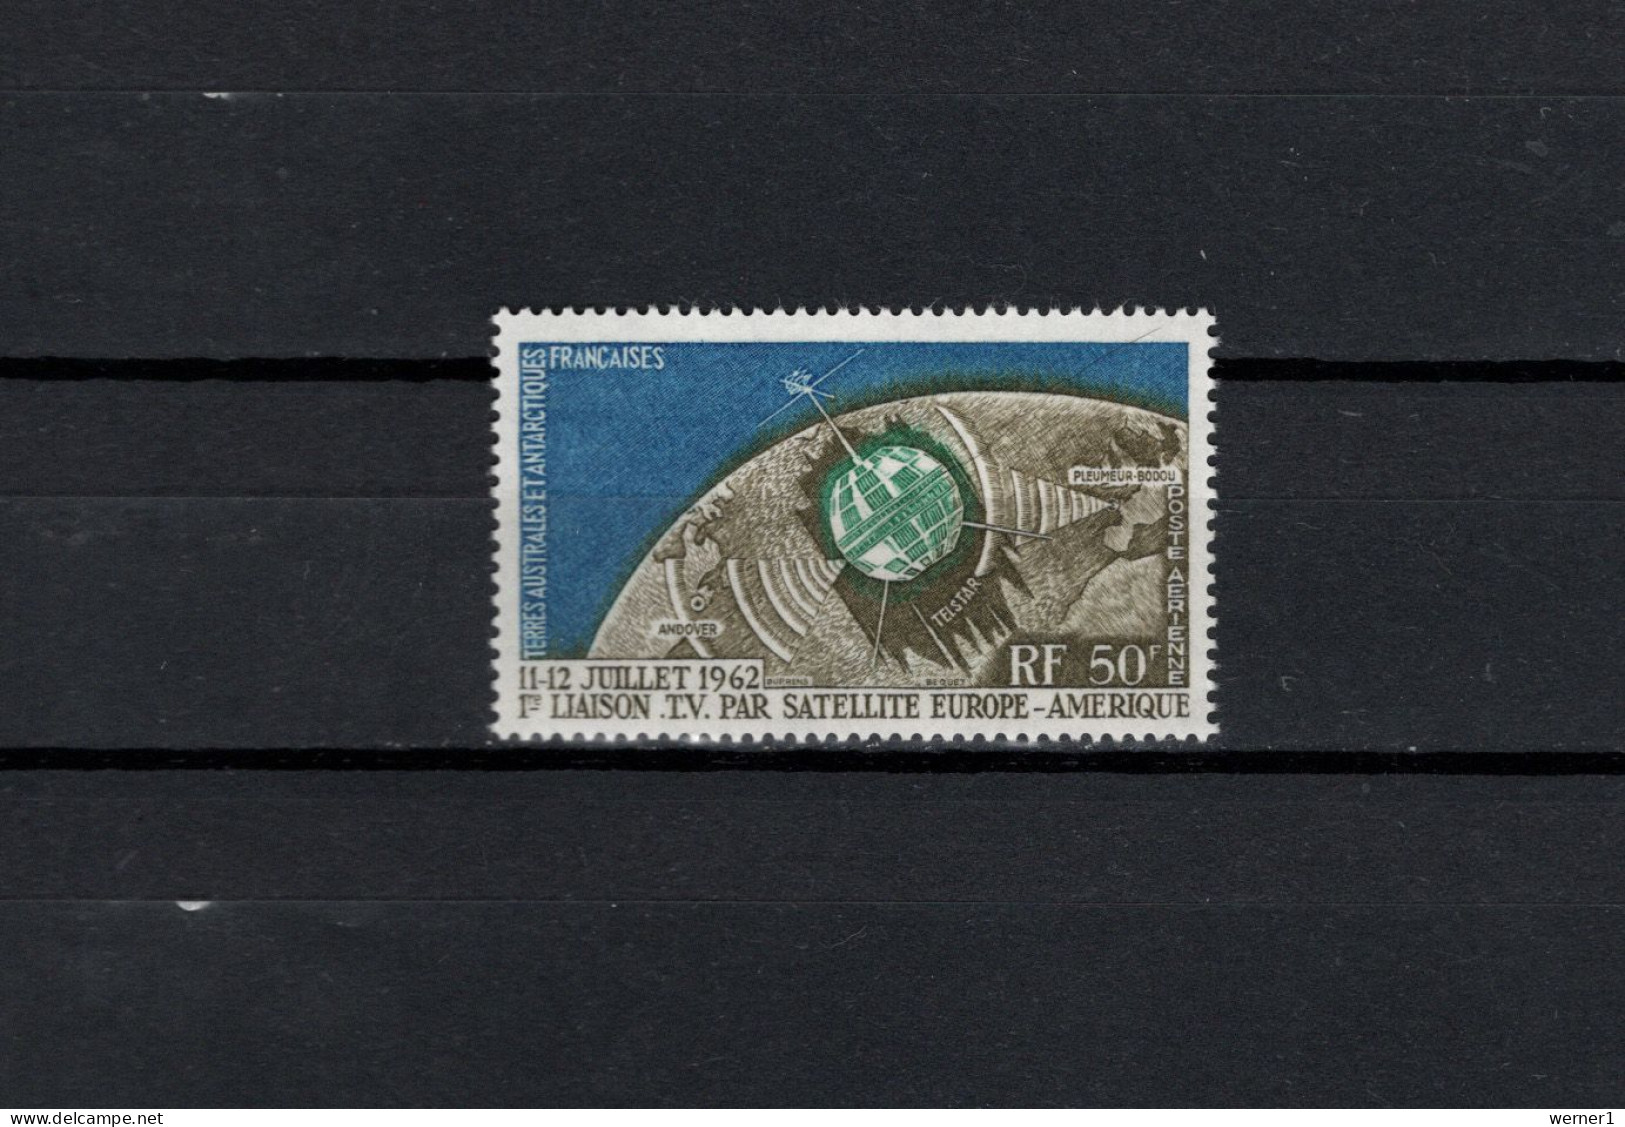 FSAT French Antarctic Territory 1962 Space Telstar Stamp MNH - Océanie